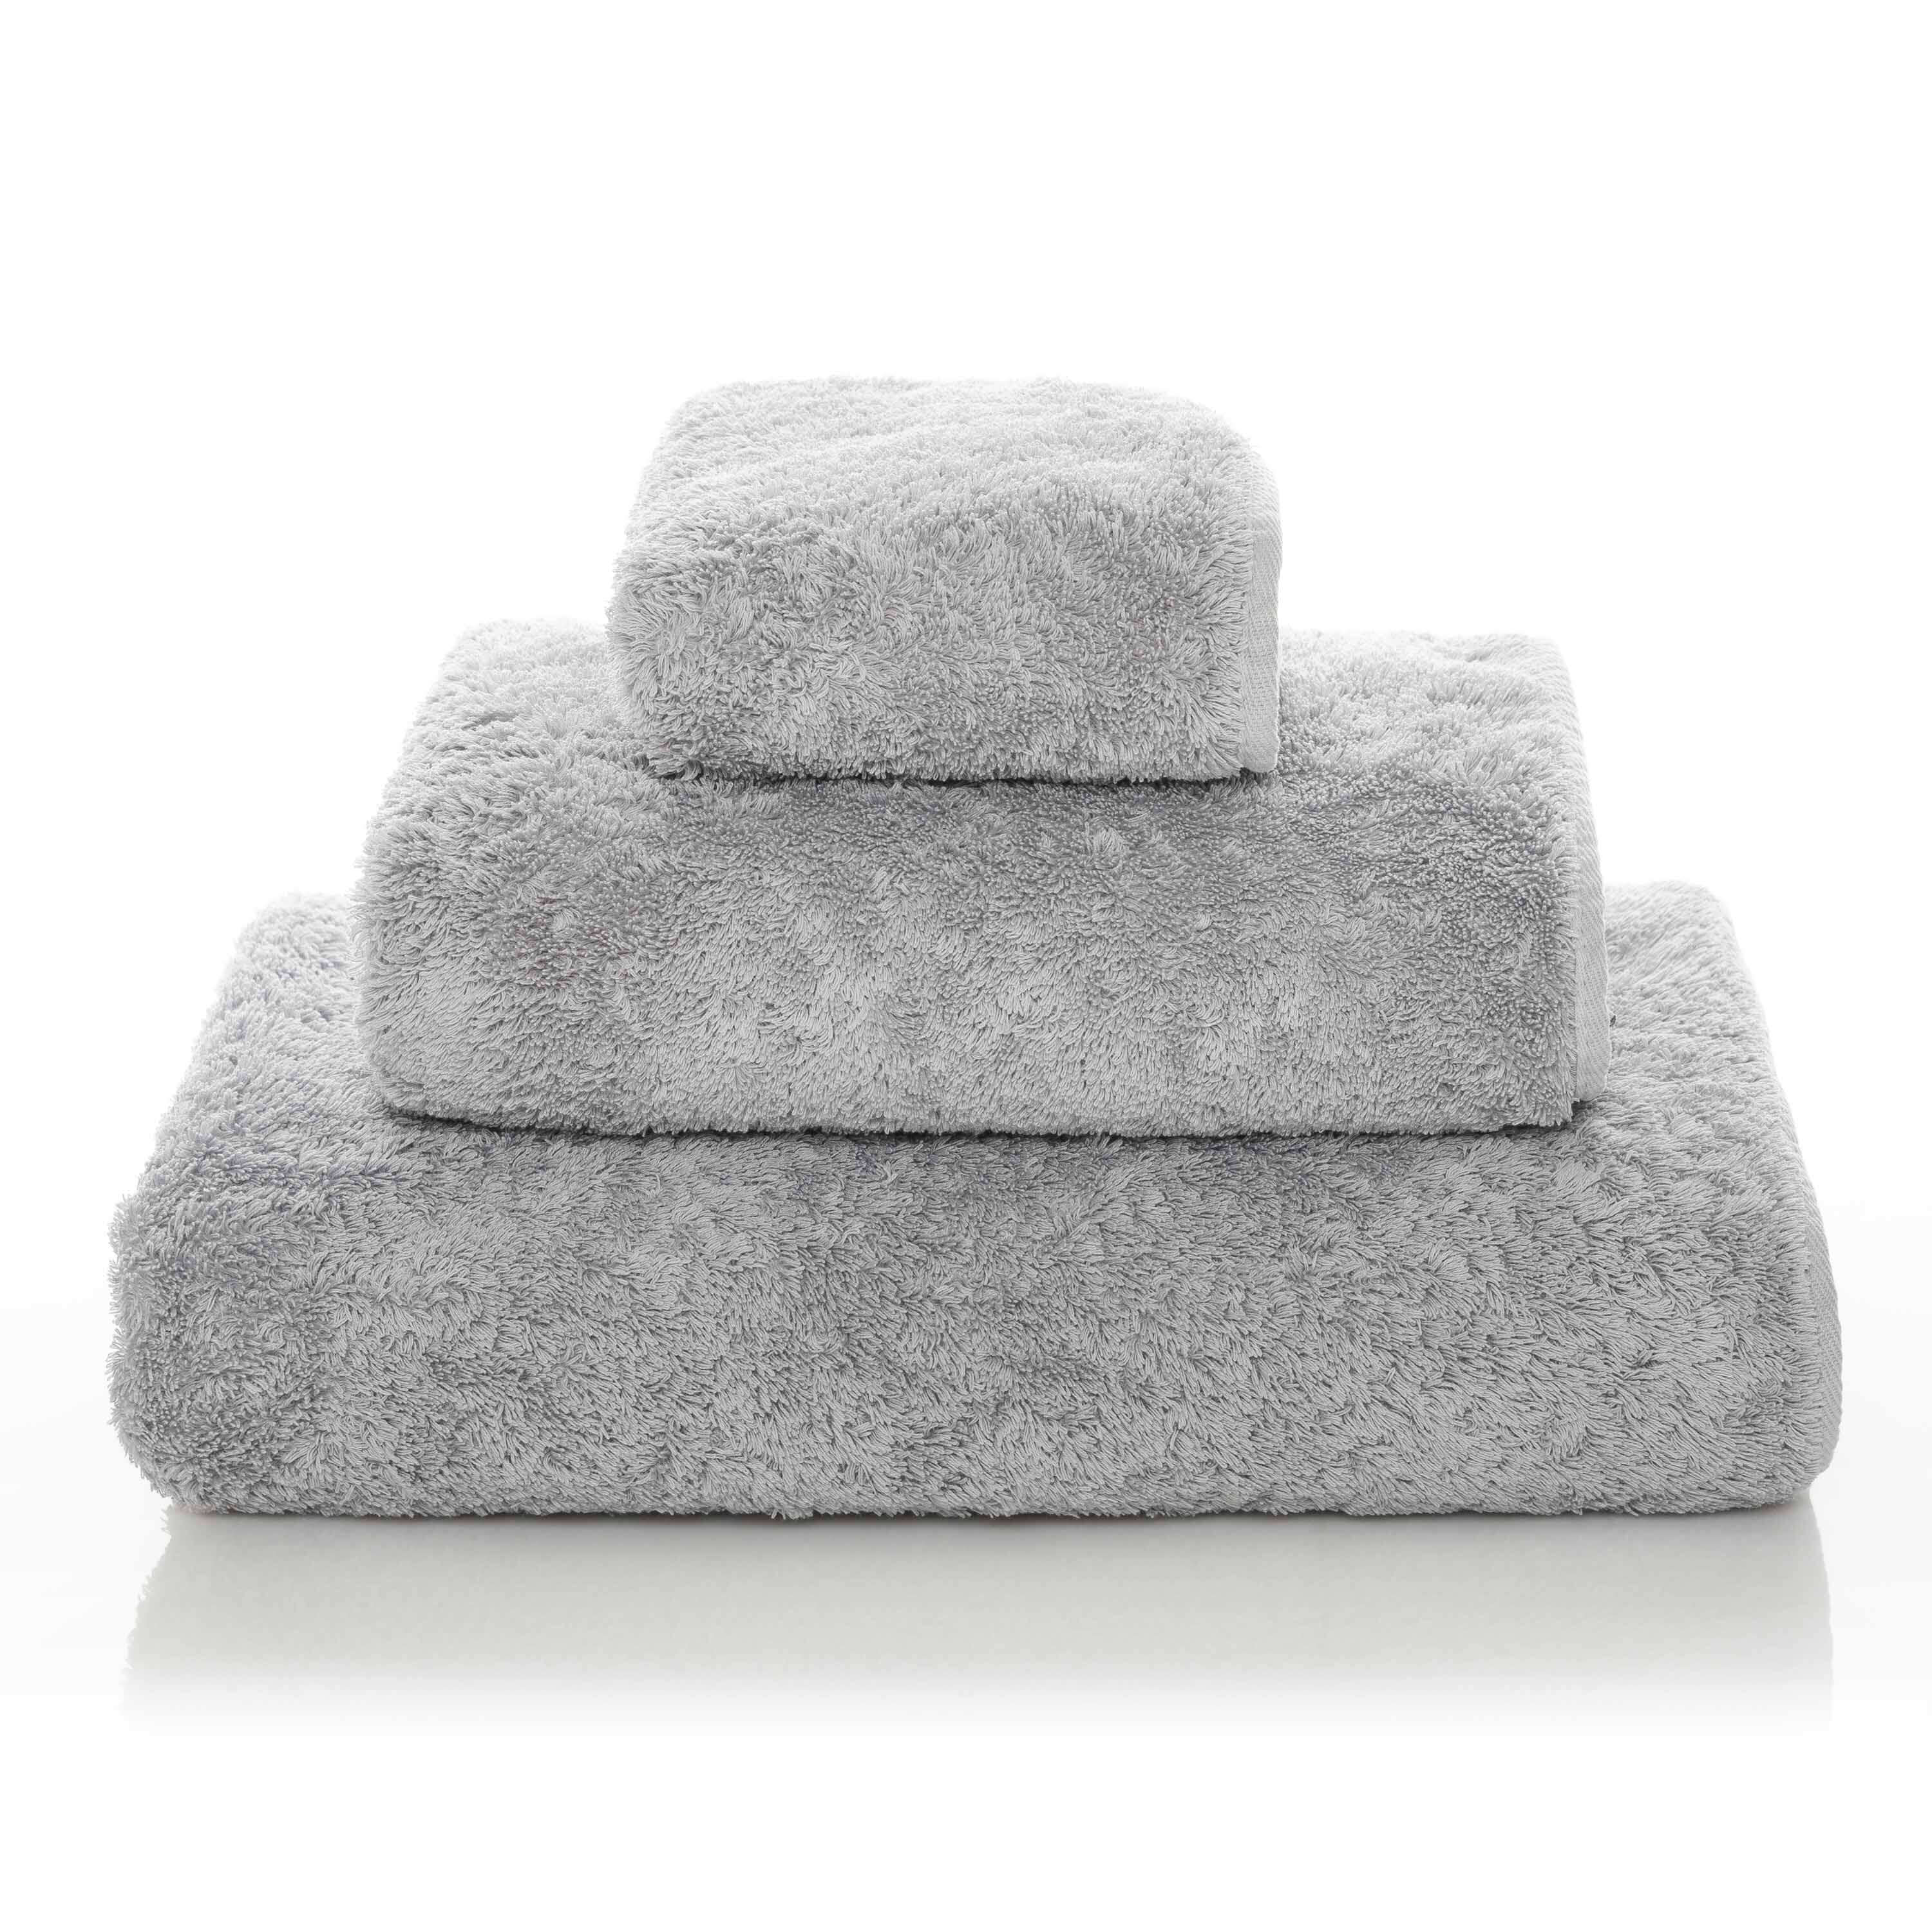 Элитное полотенце Egoist Range Silver ☞ Размер: 30 x 30 см